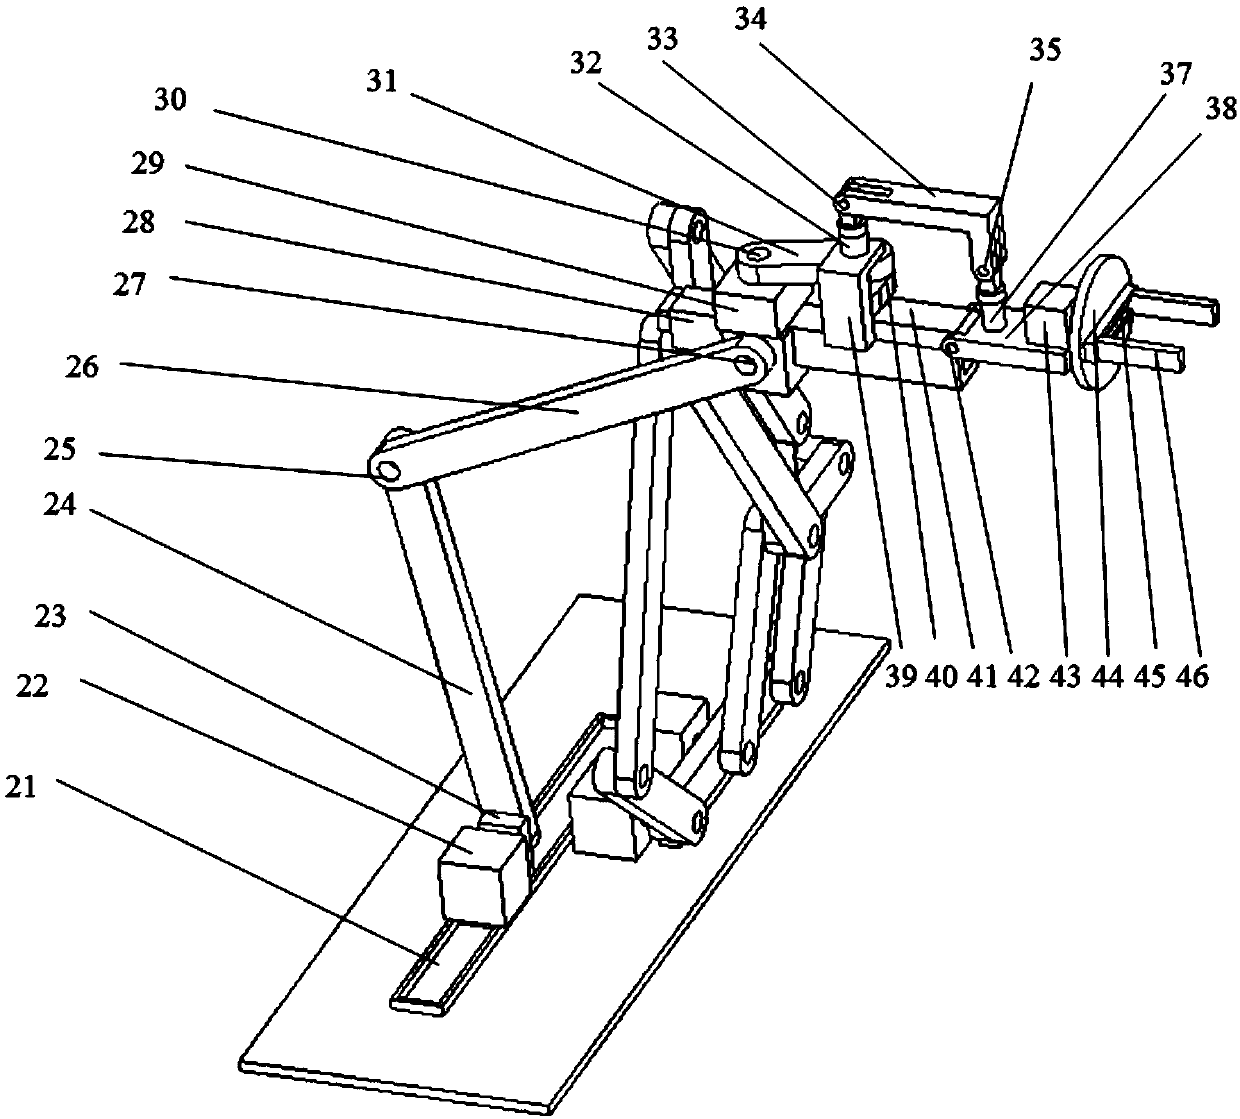 Full-degree-of-spatial-freedom metamorphic mechanism type palletizing robot mechanism